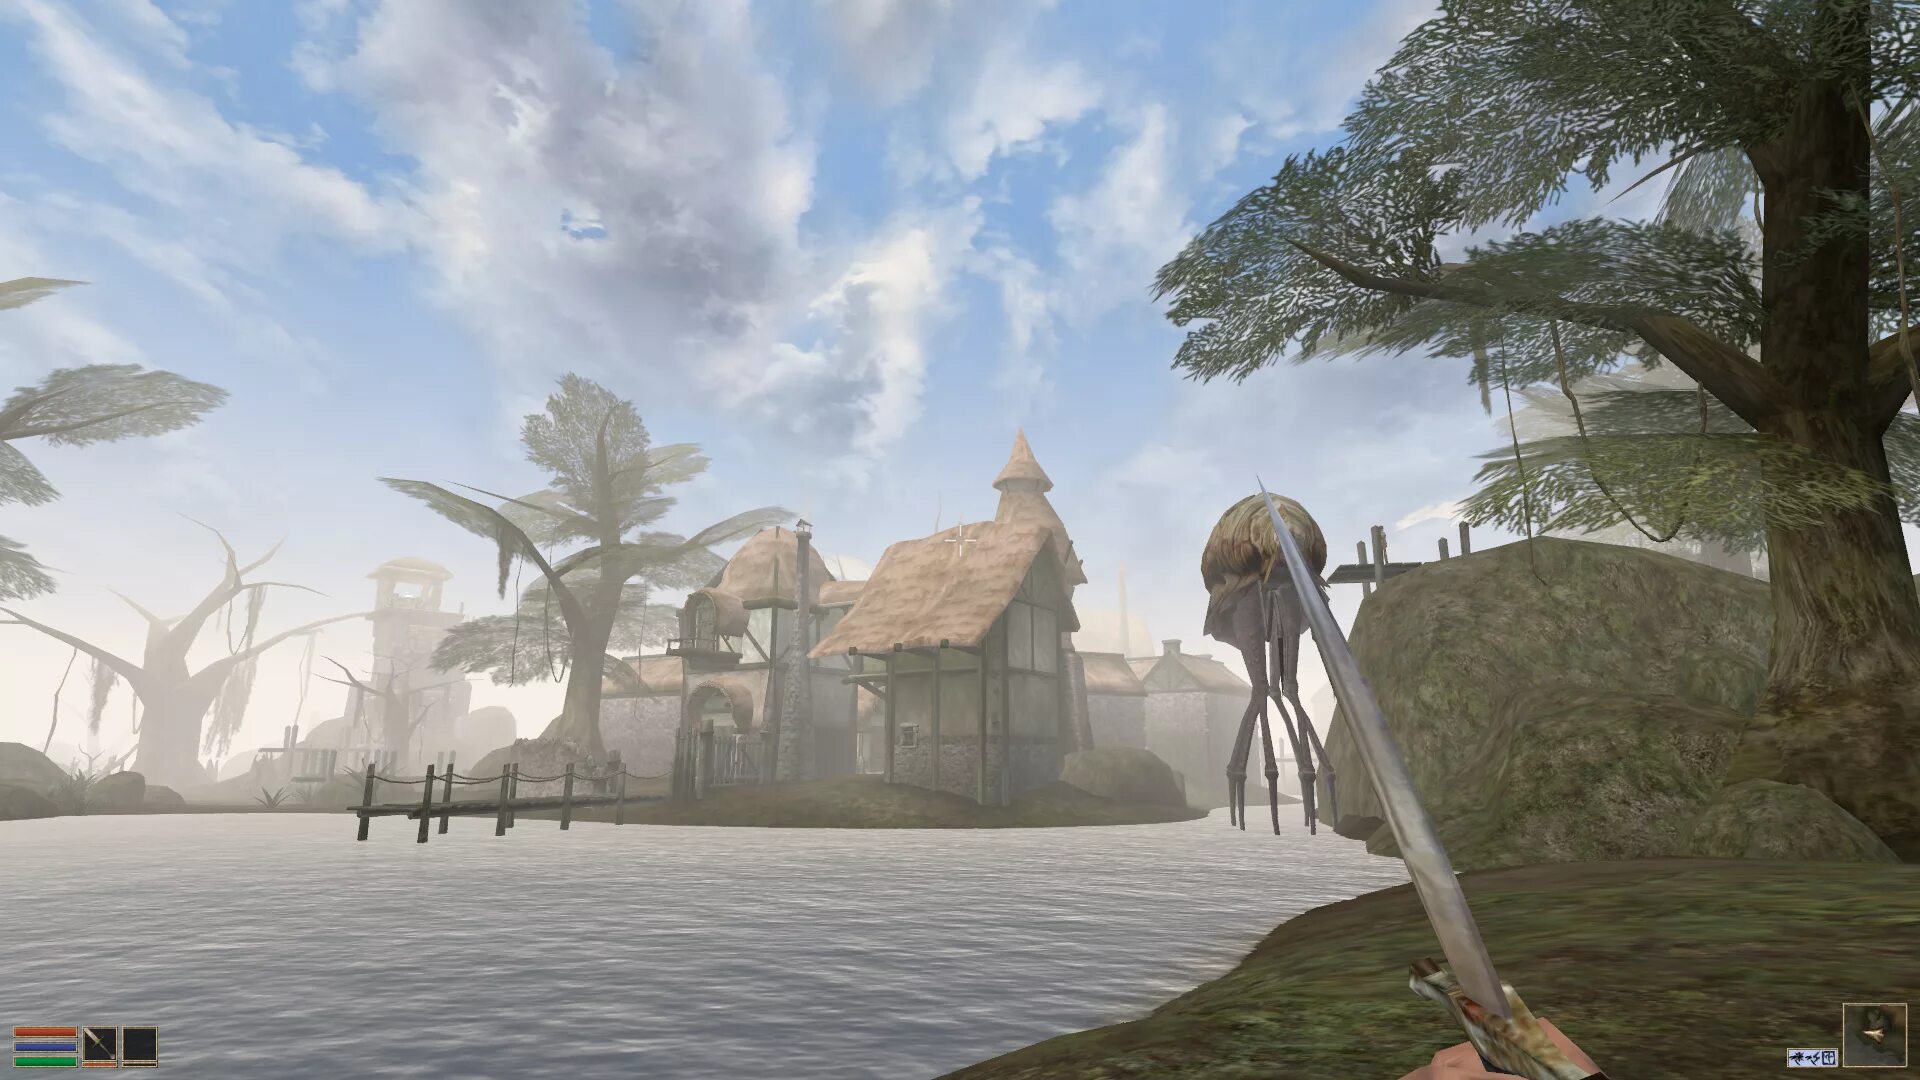 The elder scrolls morrowind. The Elder Scrolls III: Morrowind. Морровинд пустоши. Воронья скала морровинд. 1 Место: the Elder Scrolls III: Morrowind.